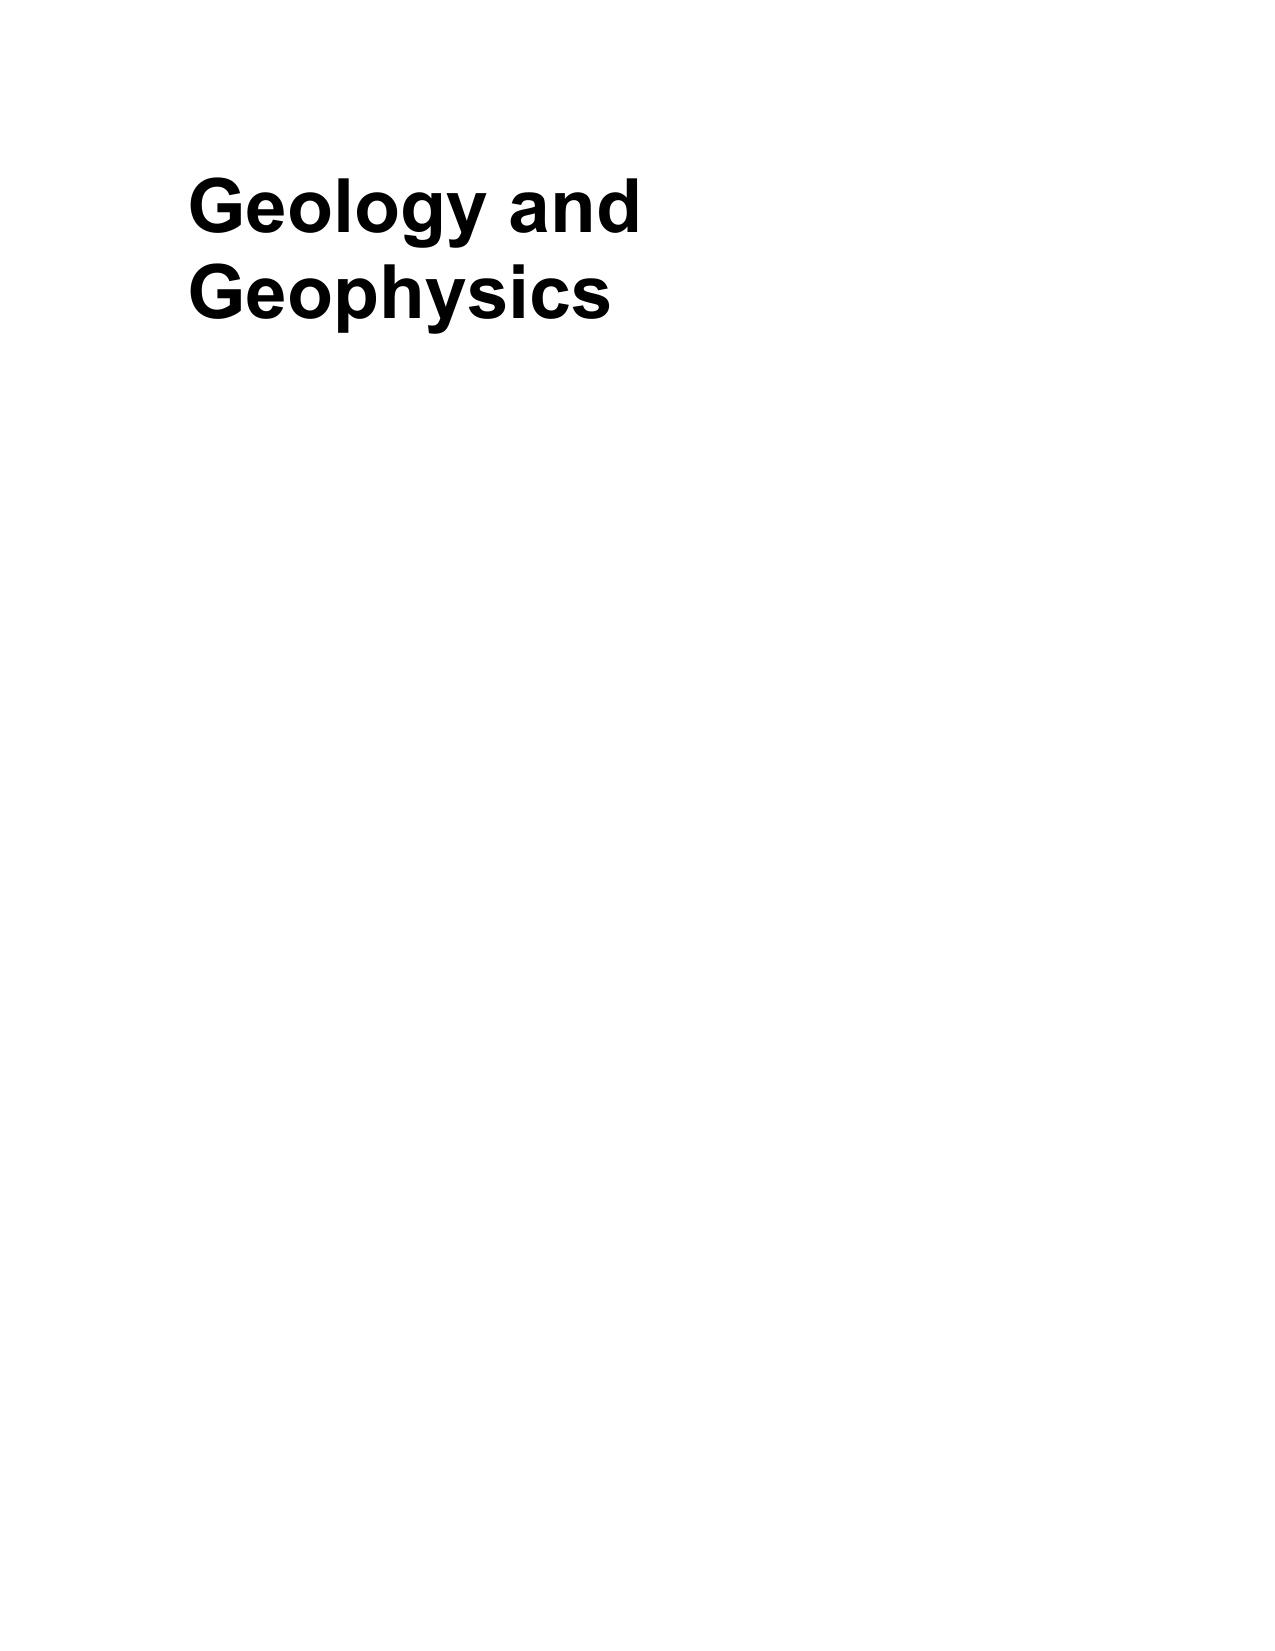 US NSF - OPP - Antarctic Journal, Vol. 33 - Geology and Geophysics